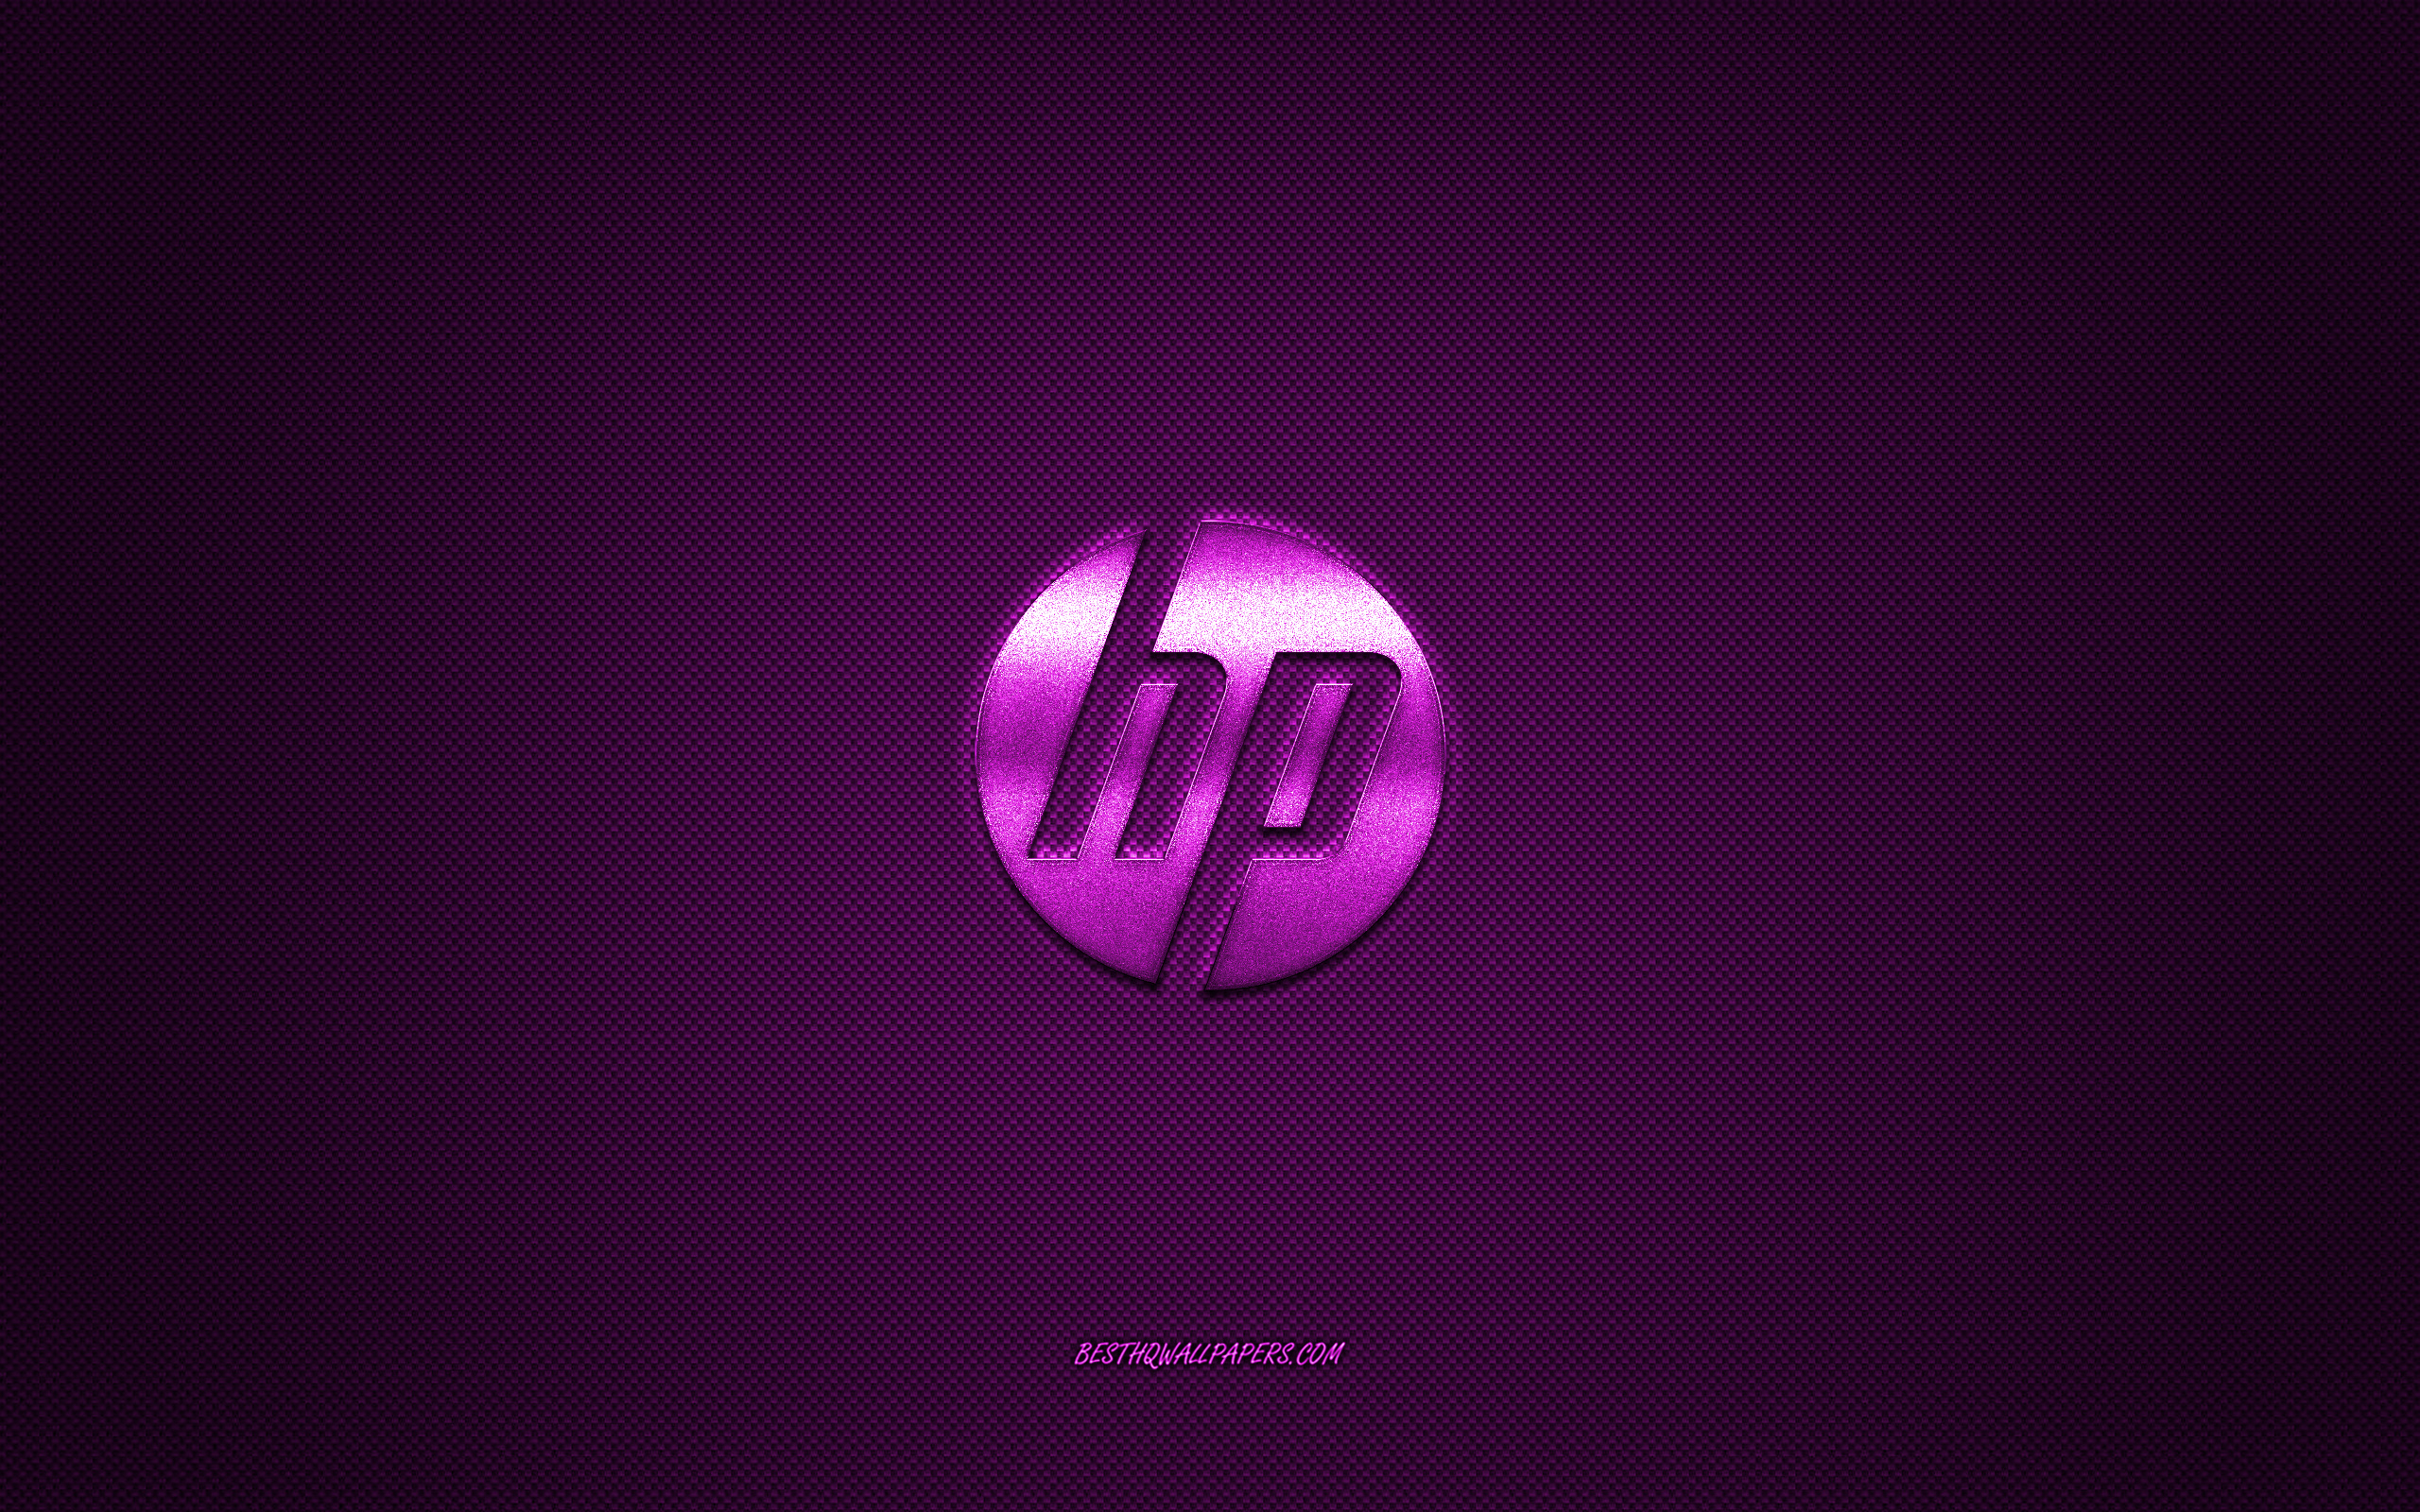 sony wallpaper hd 1080p,violet,text,font,purple,logo